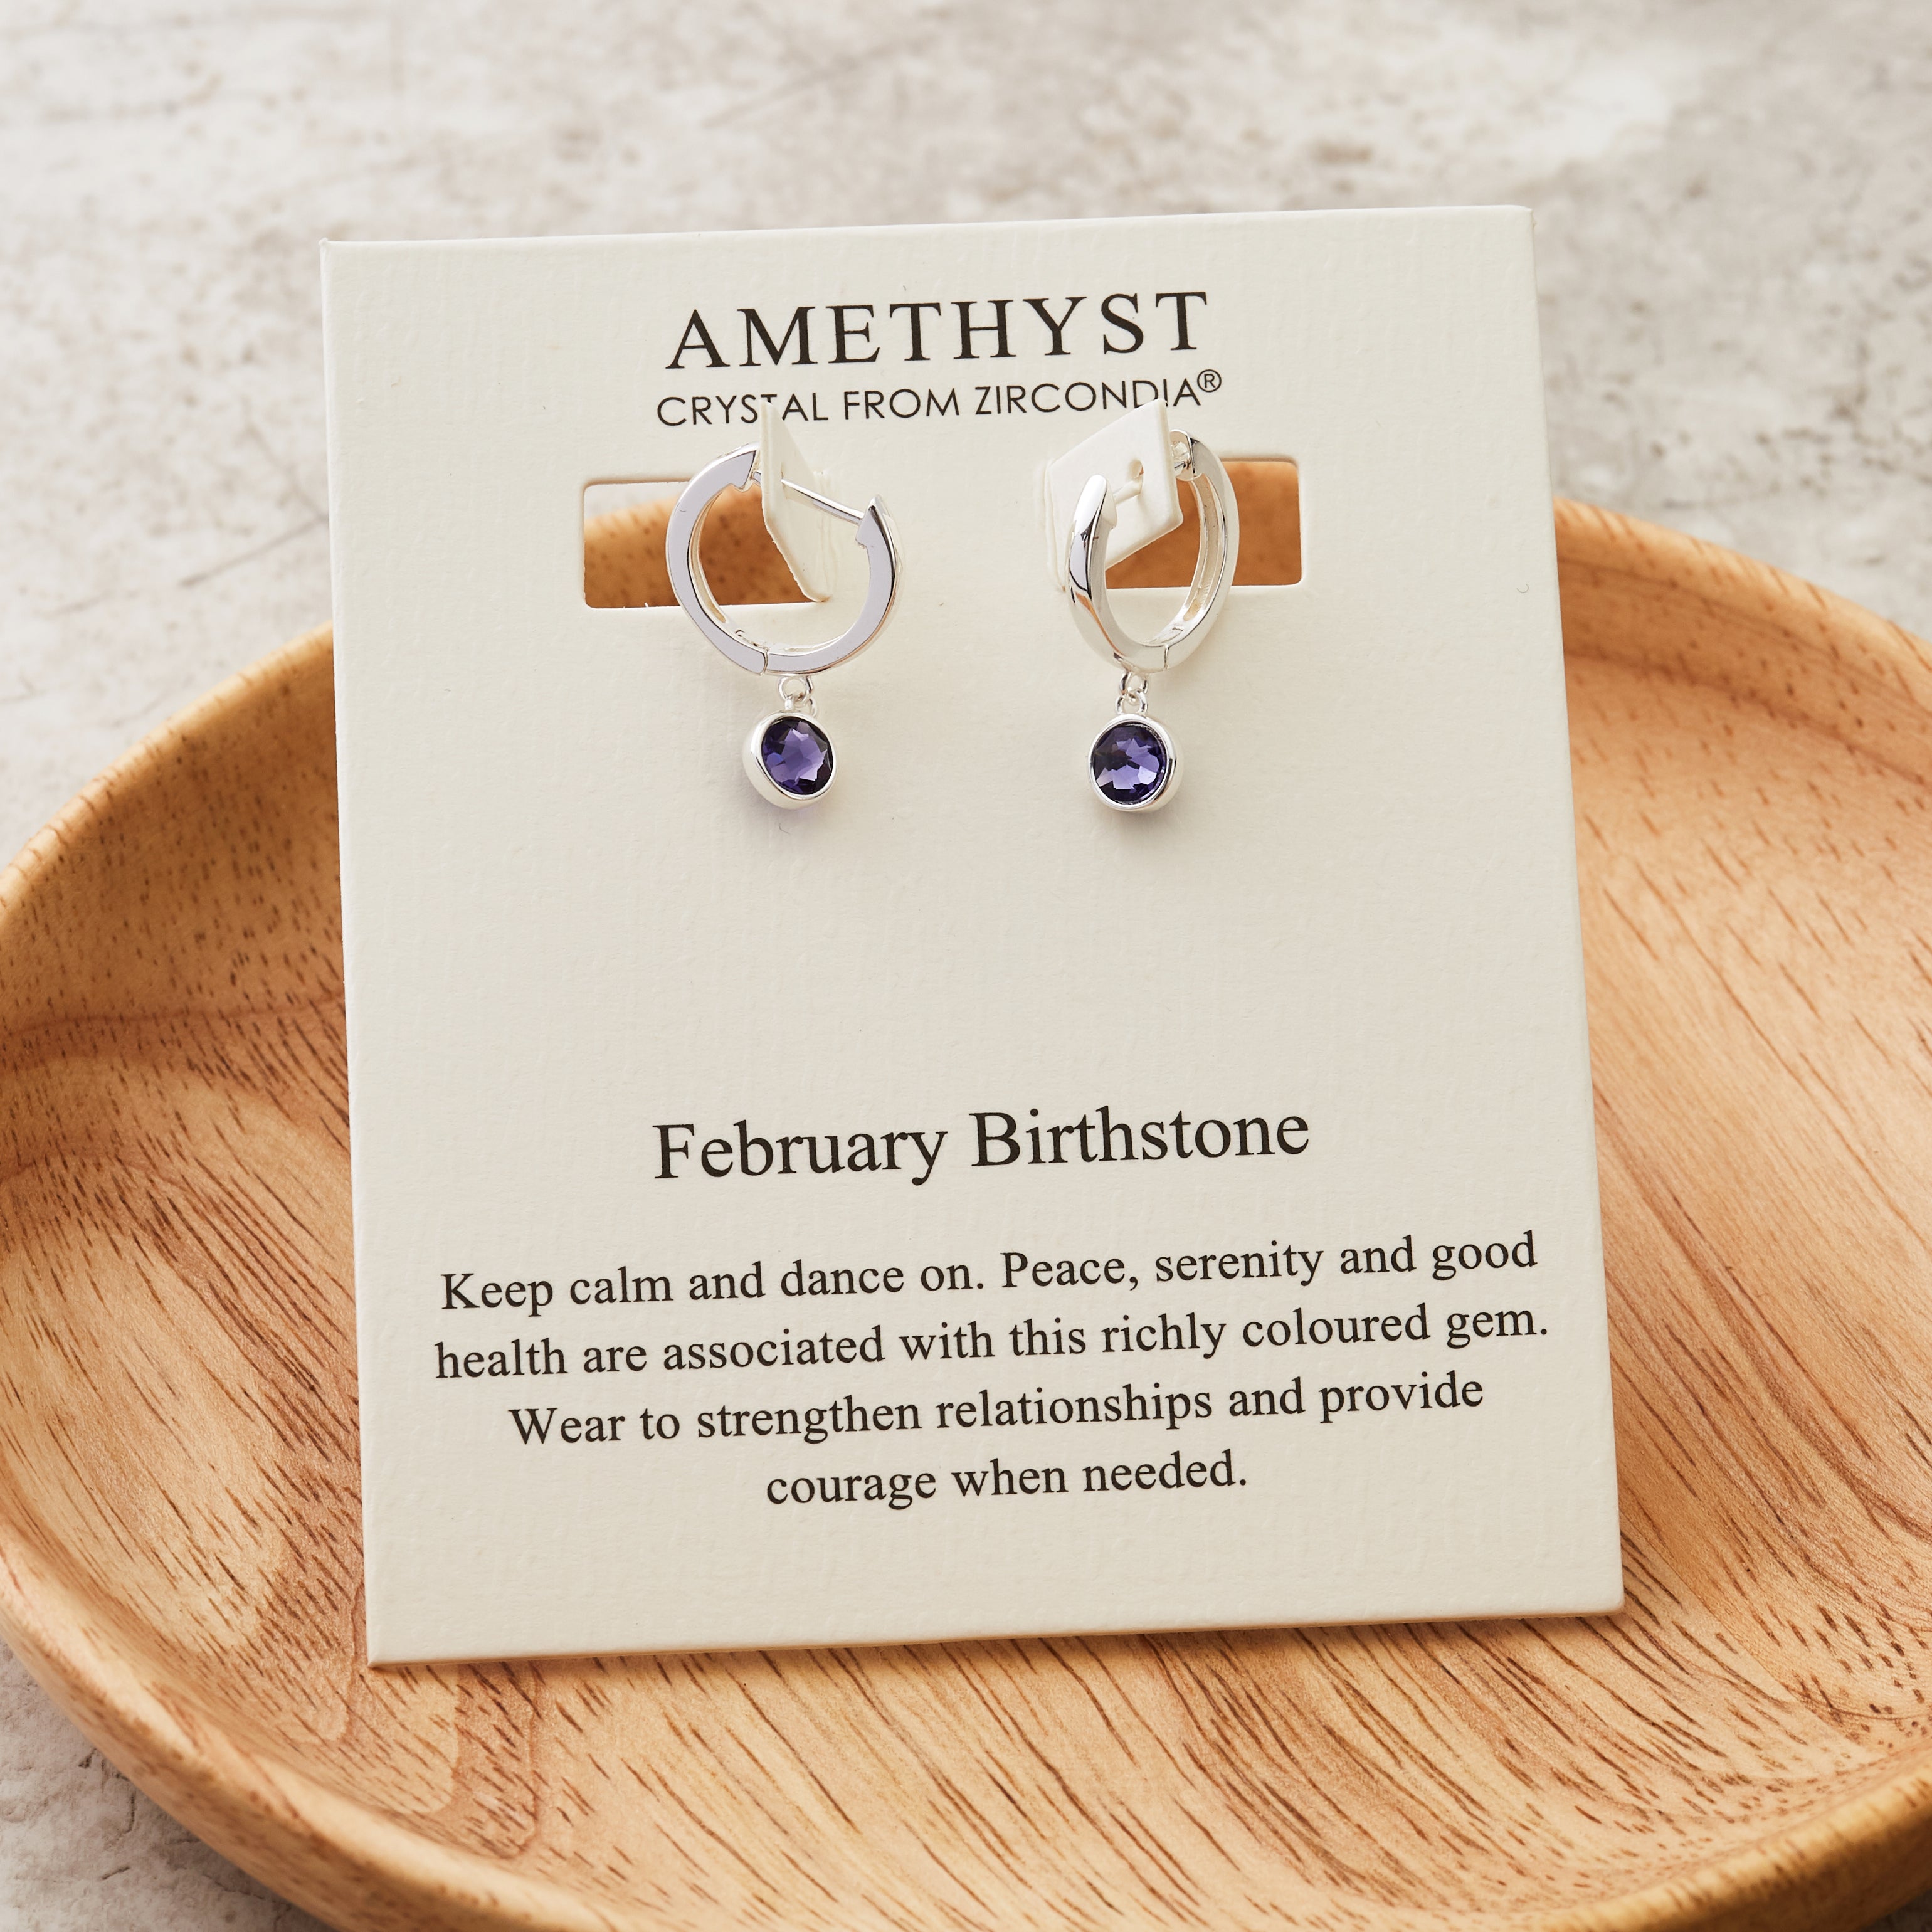 February Birthstone Hoop Earrings Created with Amethyst Zircondia® Crystals